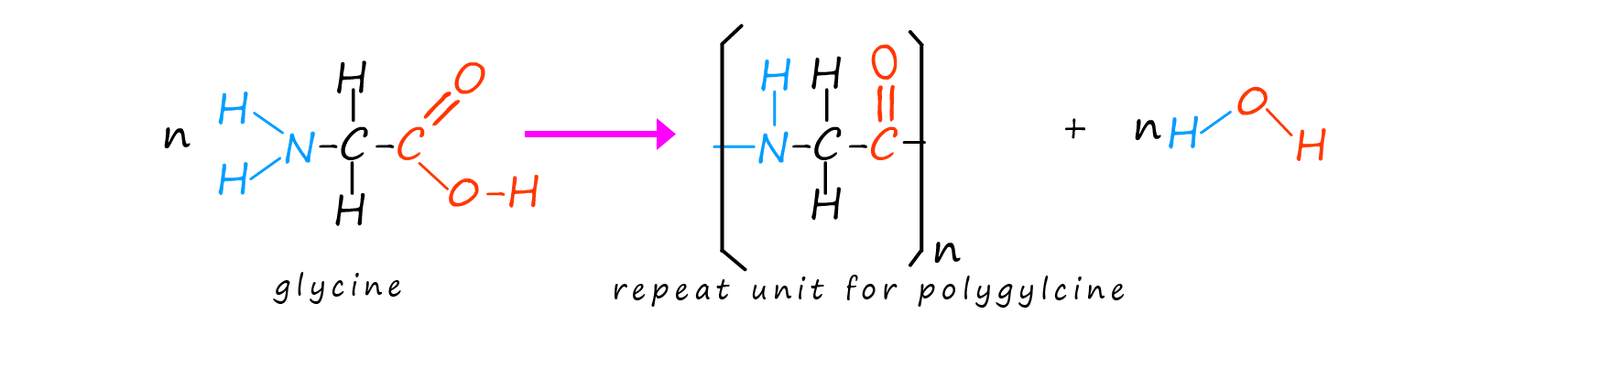 formation of polygylcine from glycine